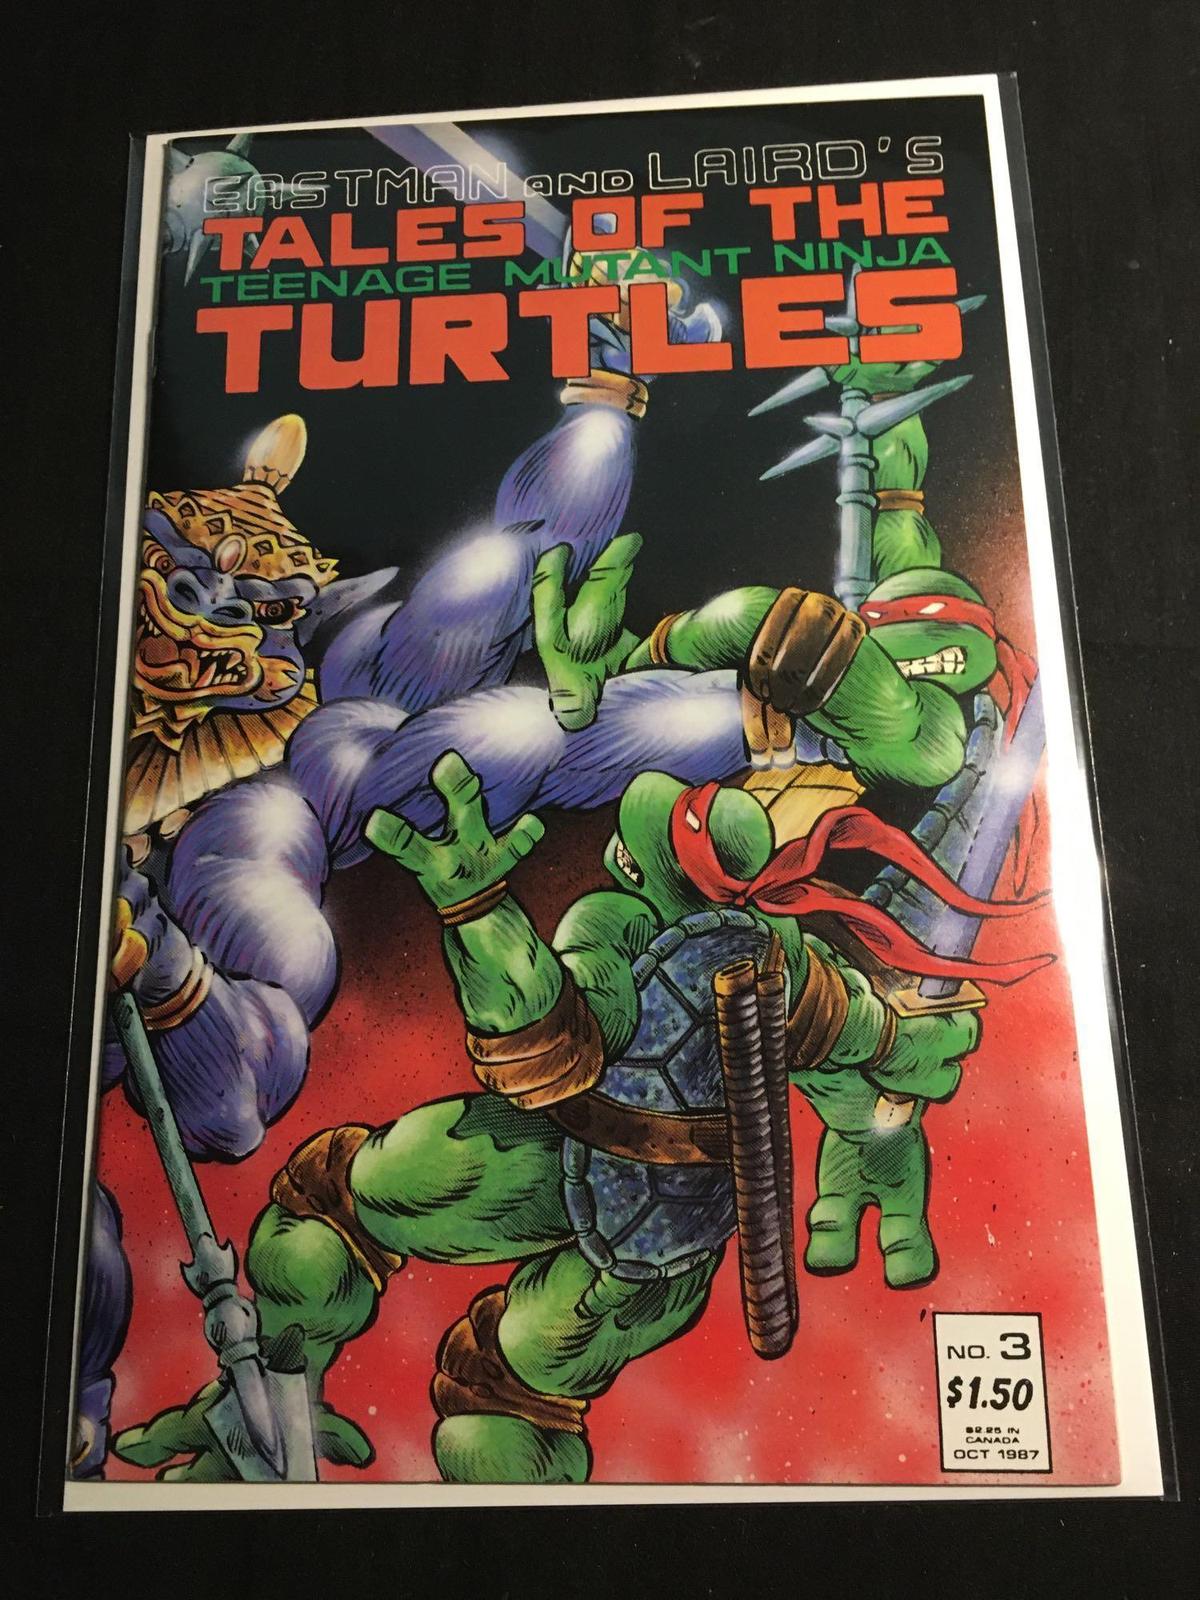 Eastman And Laird's Tales Of The Teenage Mutant Ninja Turtles #3-Comic Book